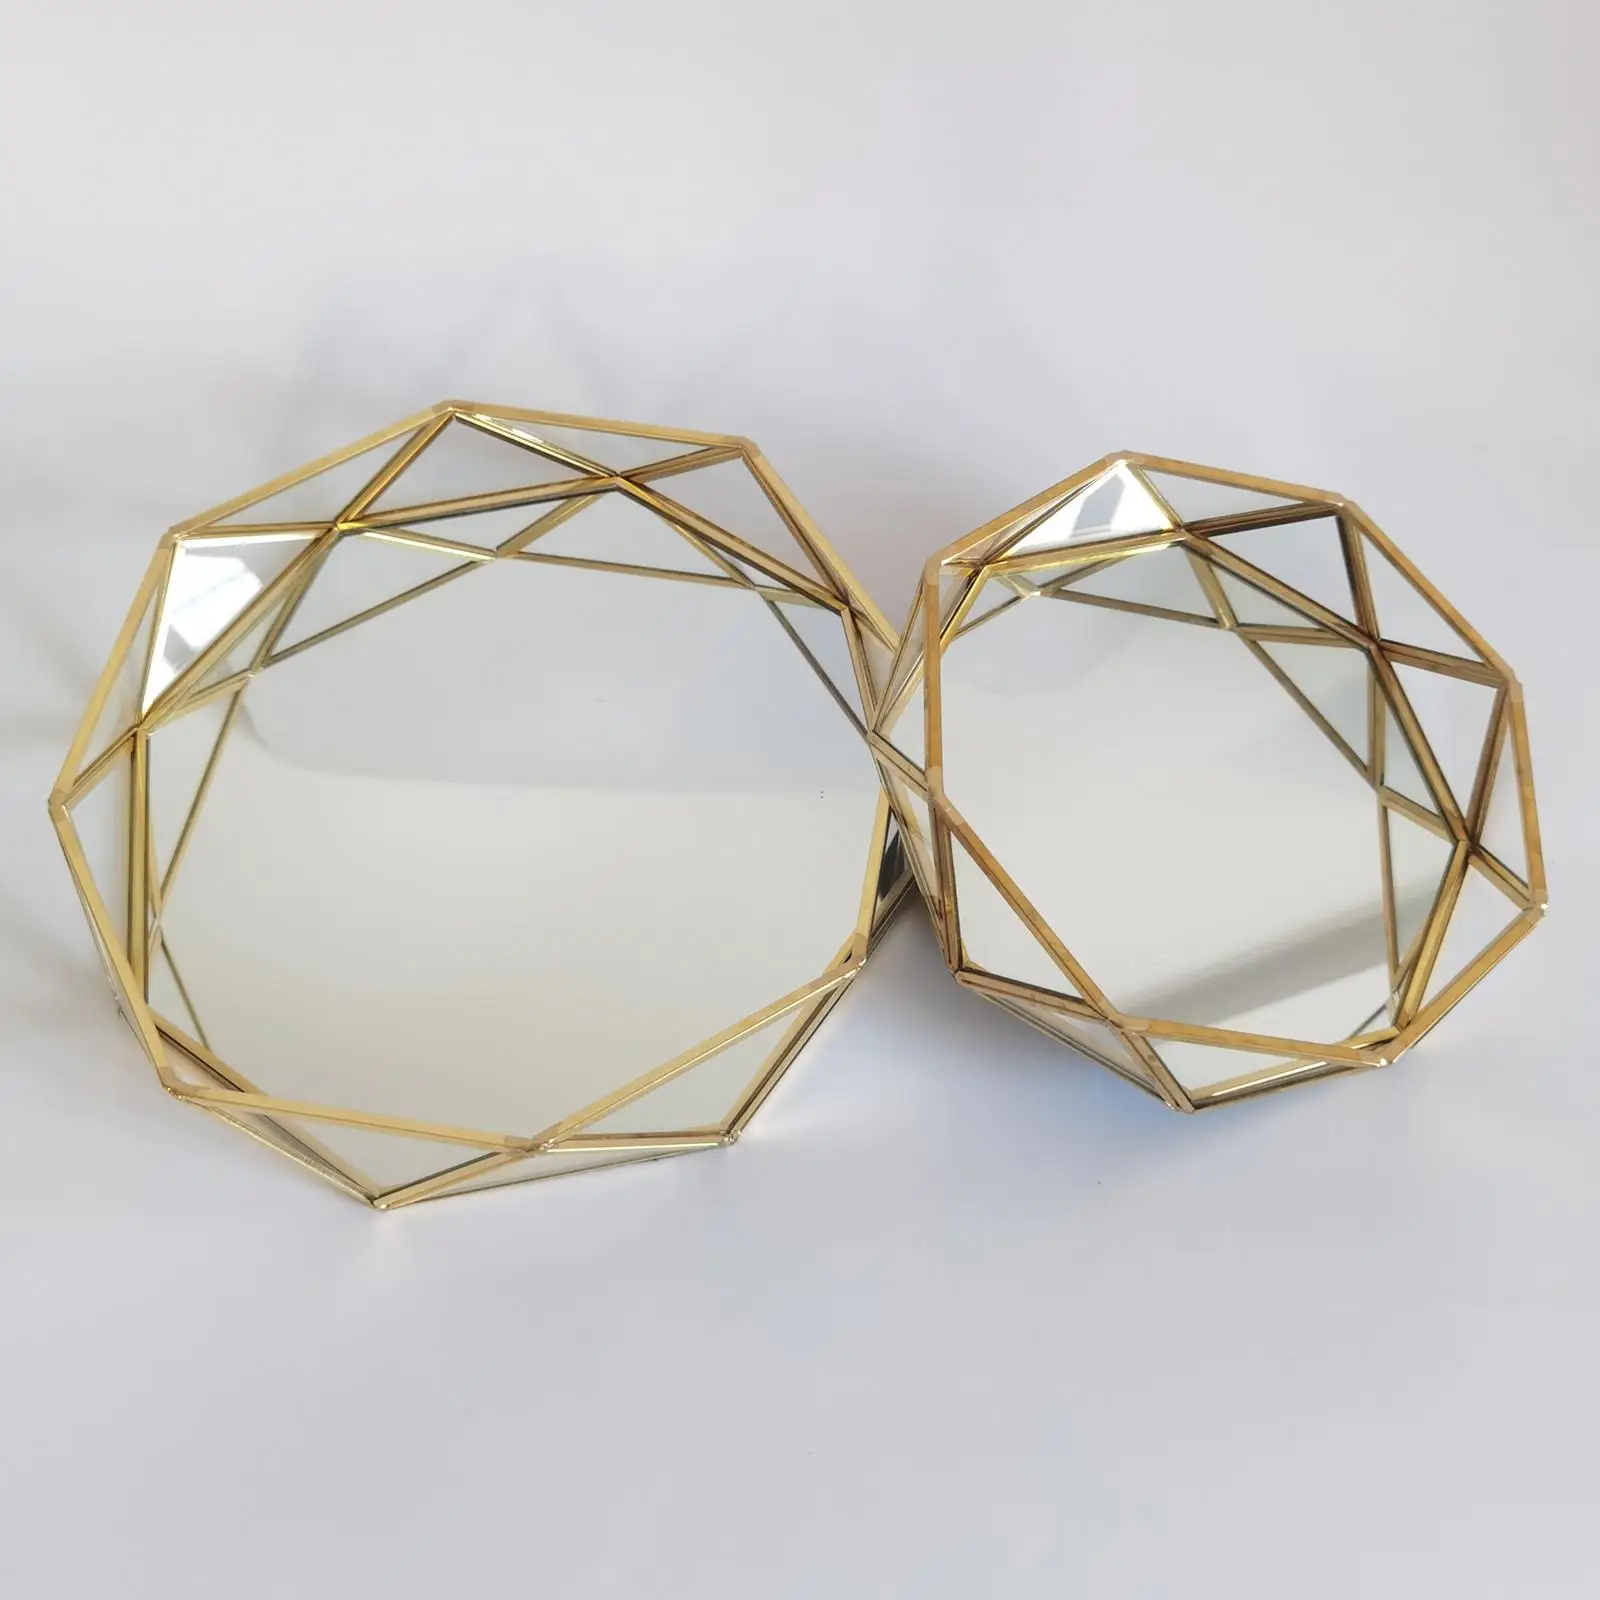 Round Mirror Glass Decorative Geometric Golden Drinks Display Tray